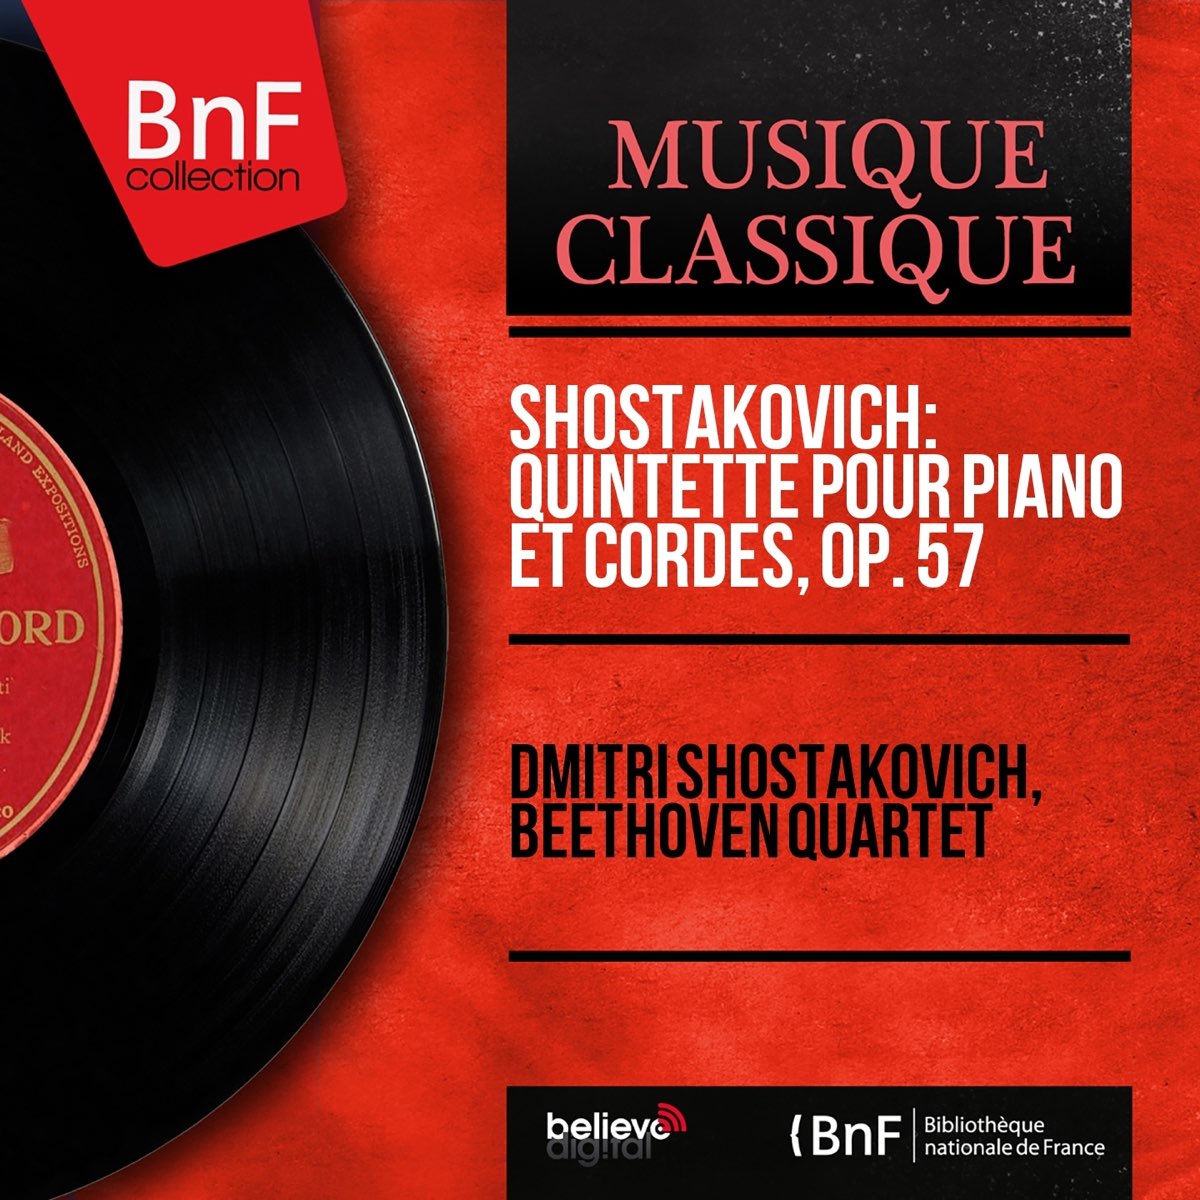 Shostakovich: Quintette pour piano et cordes, Op. 57 (Mono Version) - EP by  Dmitri Shostakovich & Beethoven Quartet on Apple Music